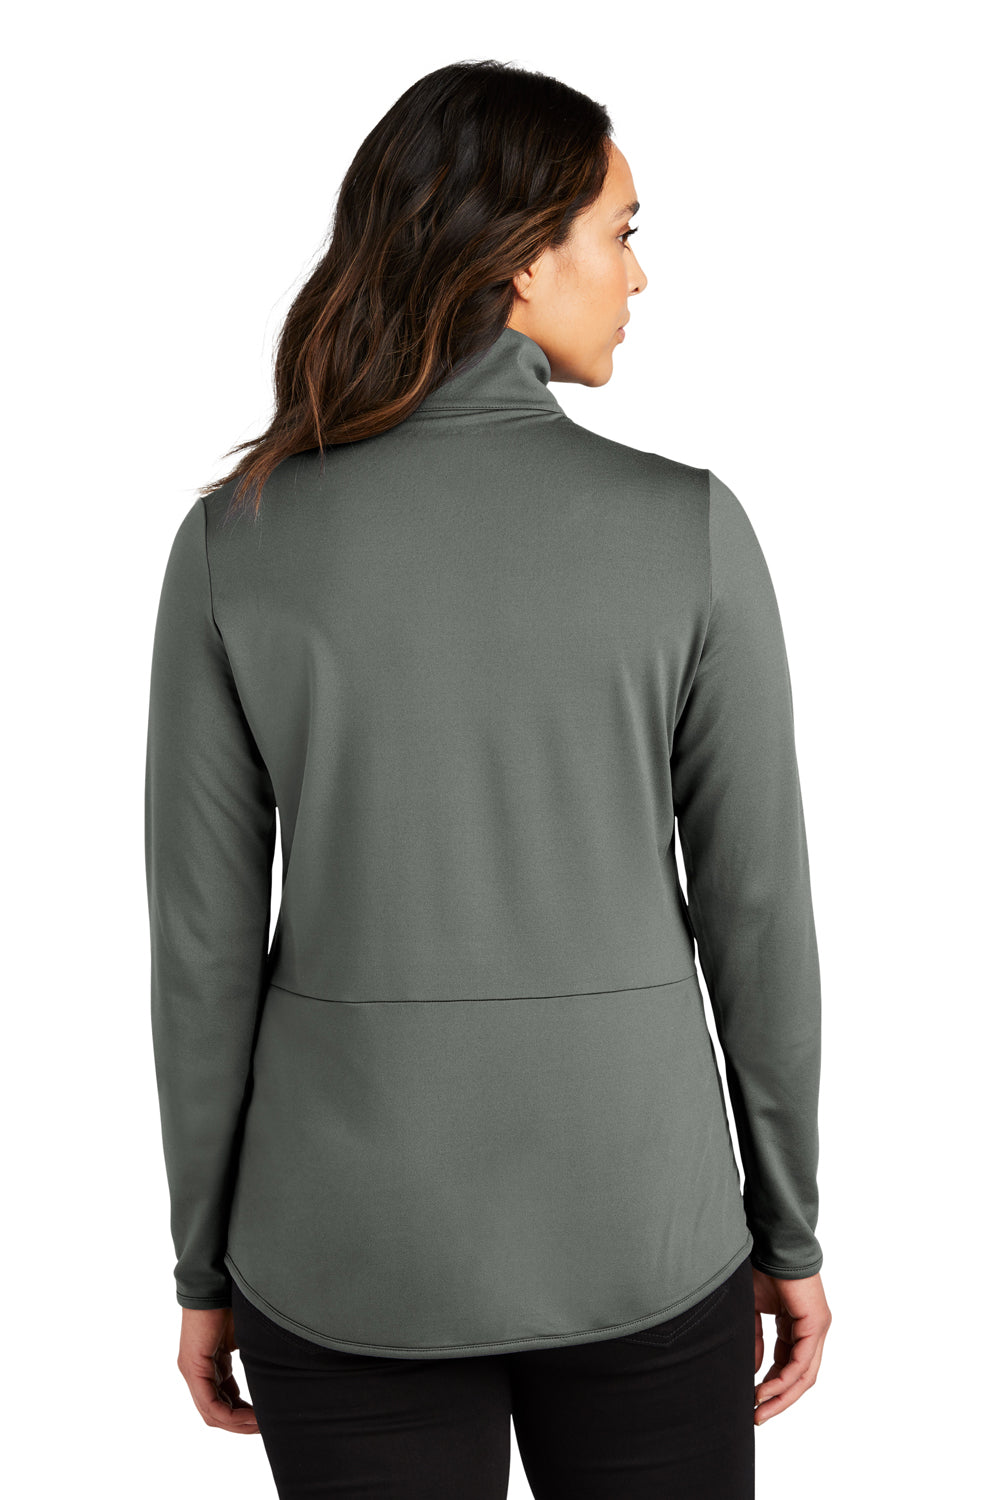 Port Authority LK595 Womens Accord Stretch Fleece Full Zip Jacket Pewter Grey Back